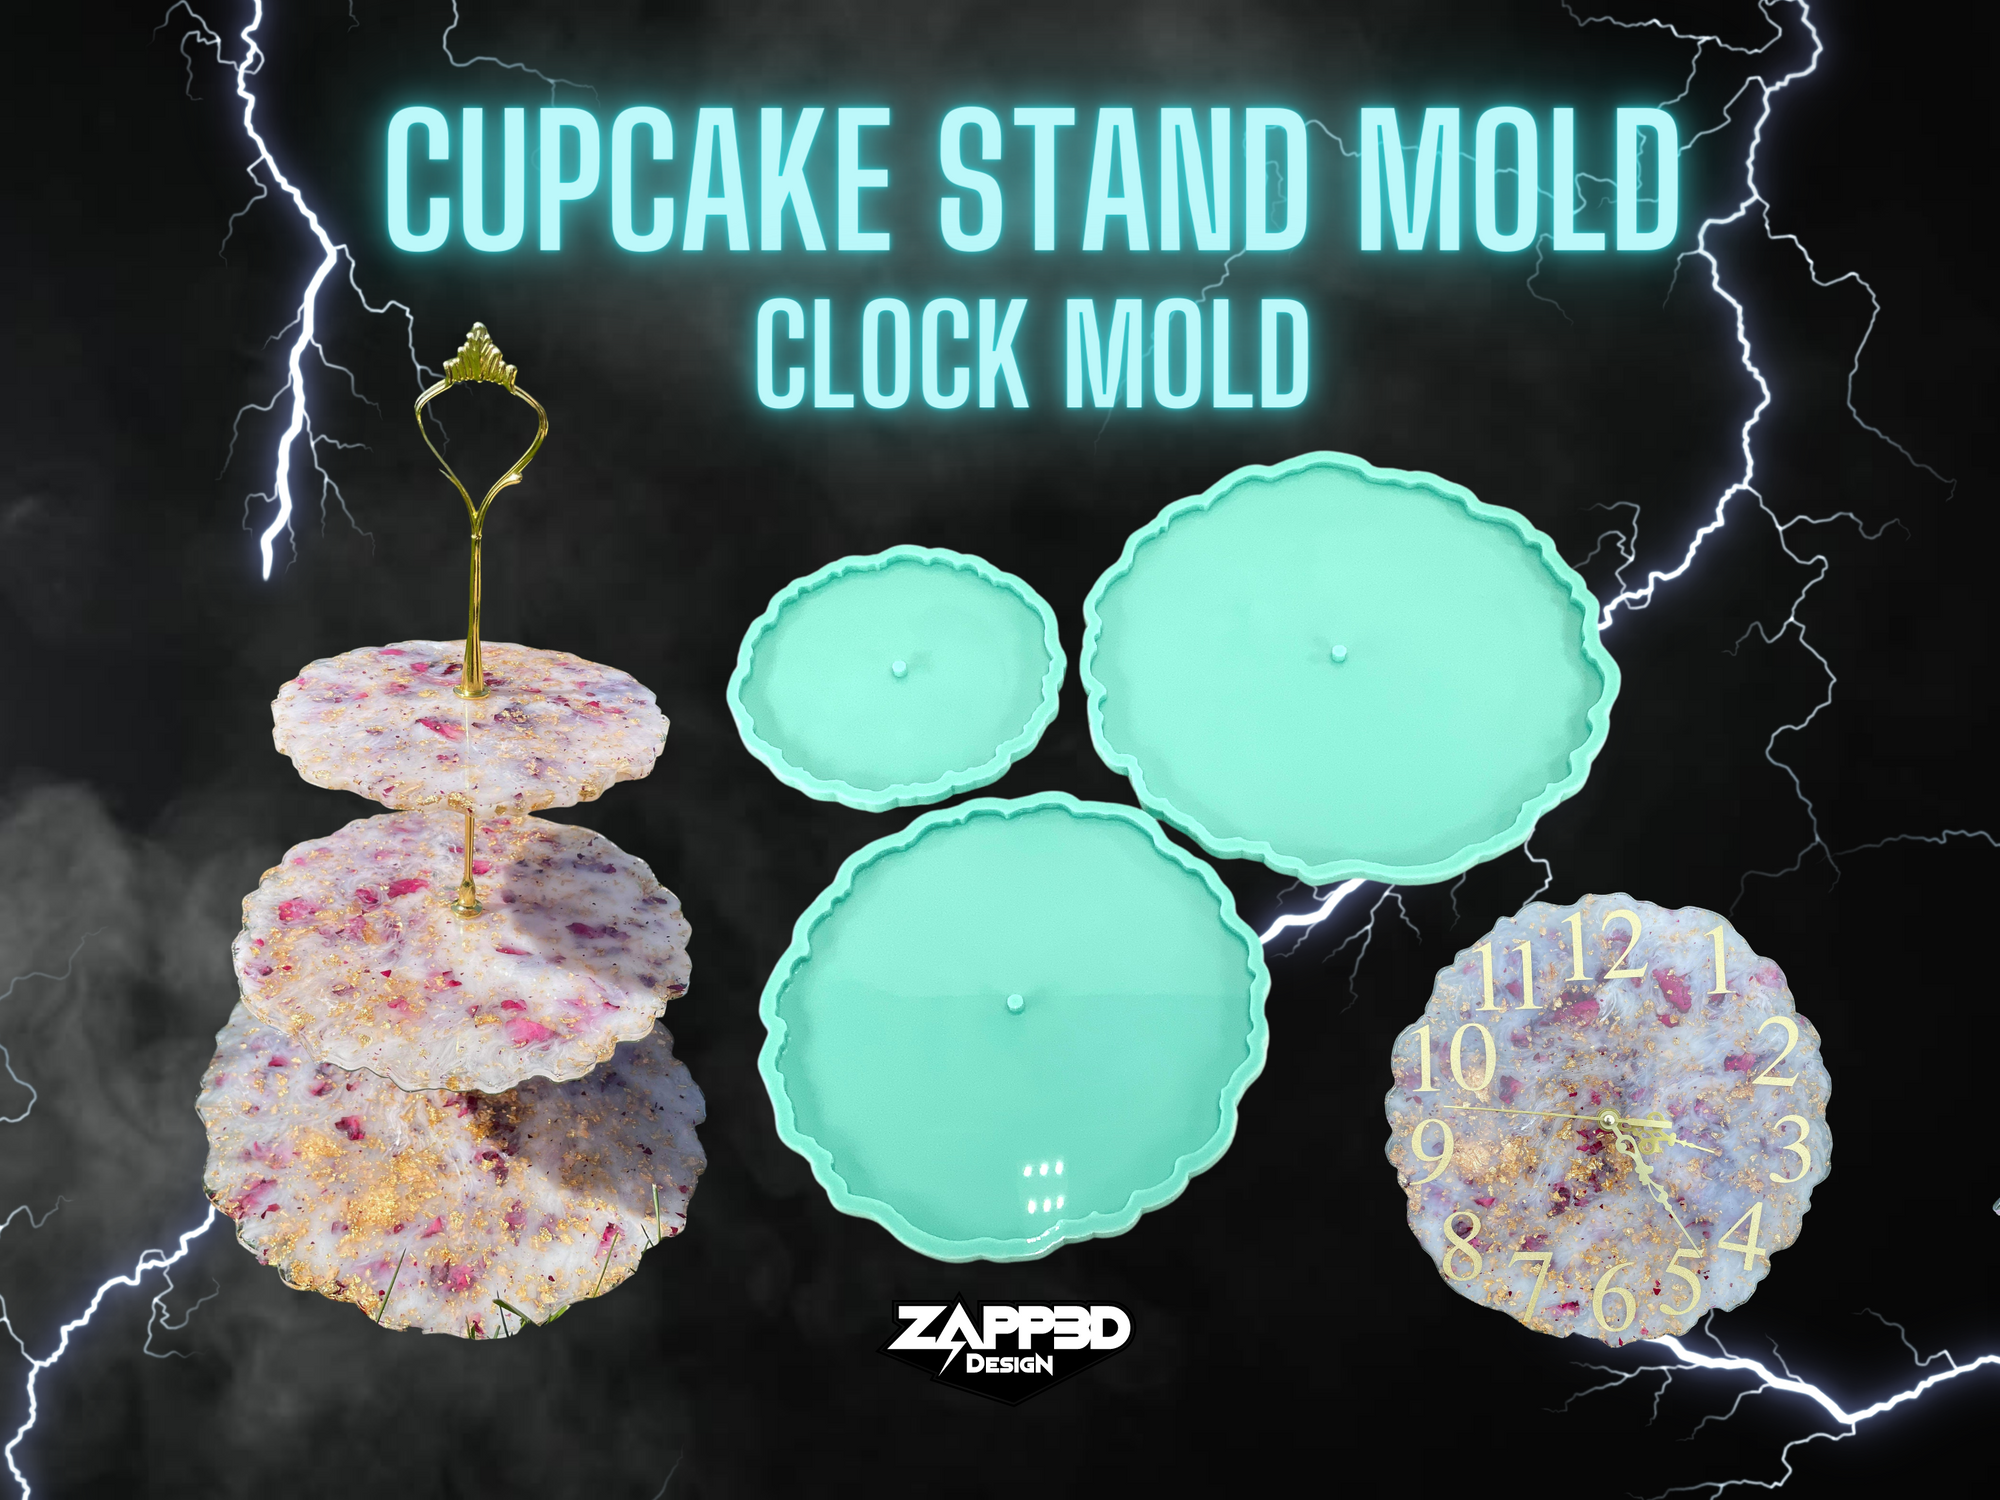 Cupcake Stand Mold, 3 Tier Cake Stand Mold, Cake Stand Mold, Geode Mold